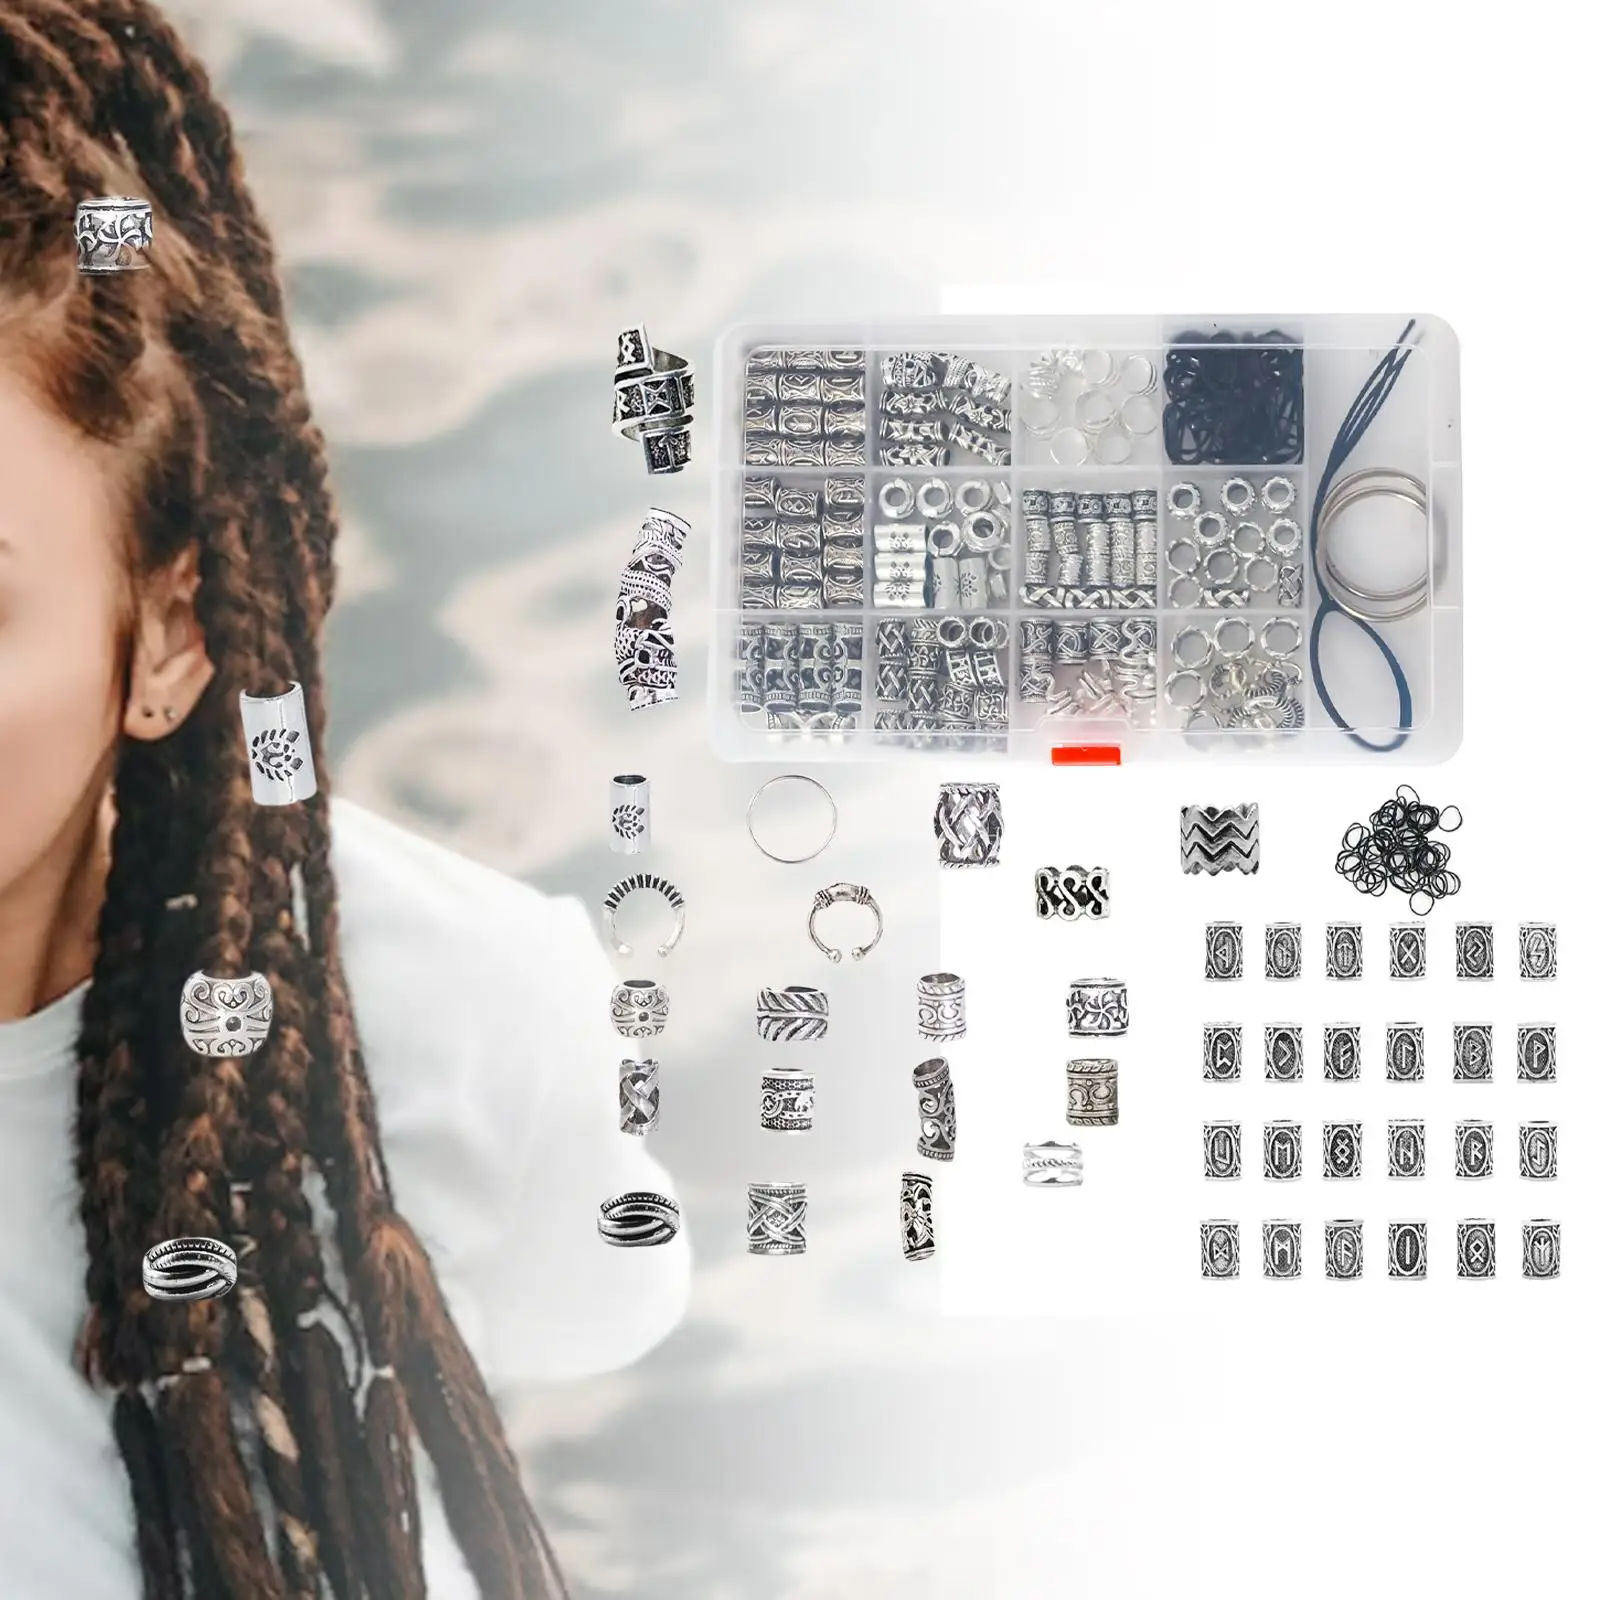 180 Pieces Mixed Dreadlocks Beads Tube Dread Locks Pins Metal Cuffs Rings Accessories Hair Braid Hair Extension Jewelry